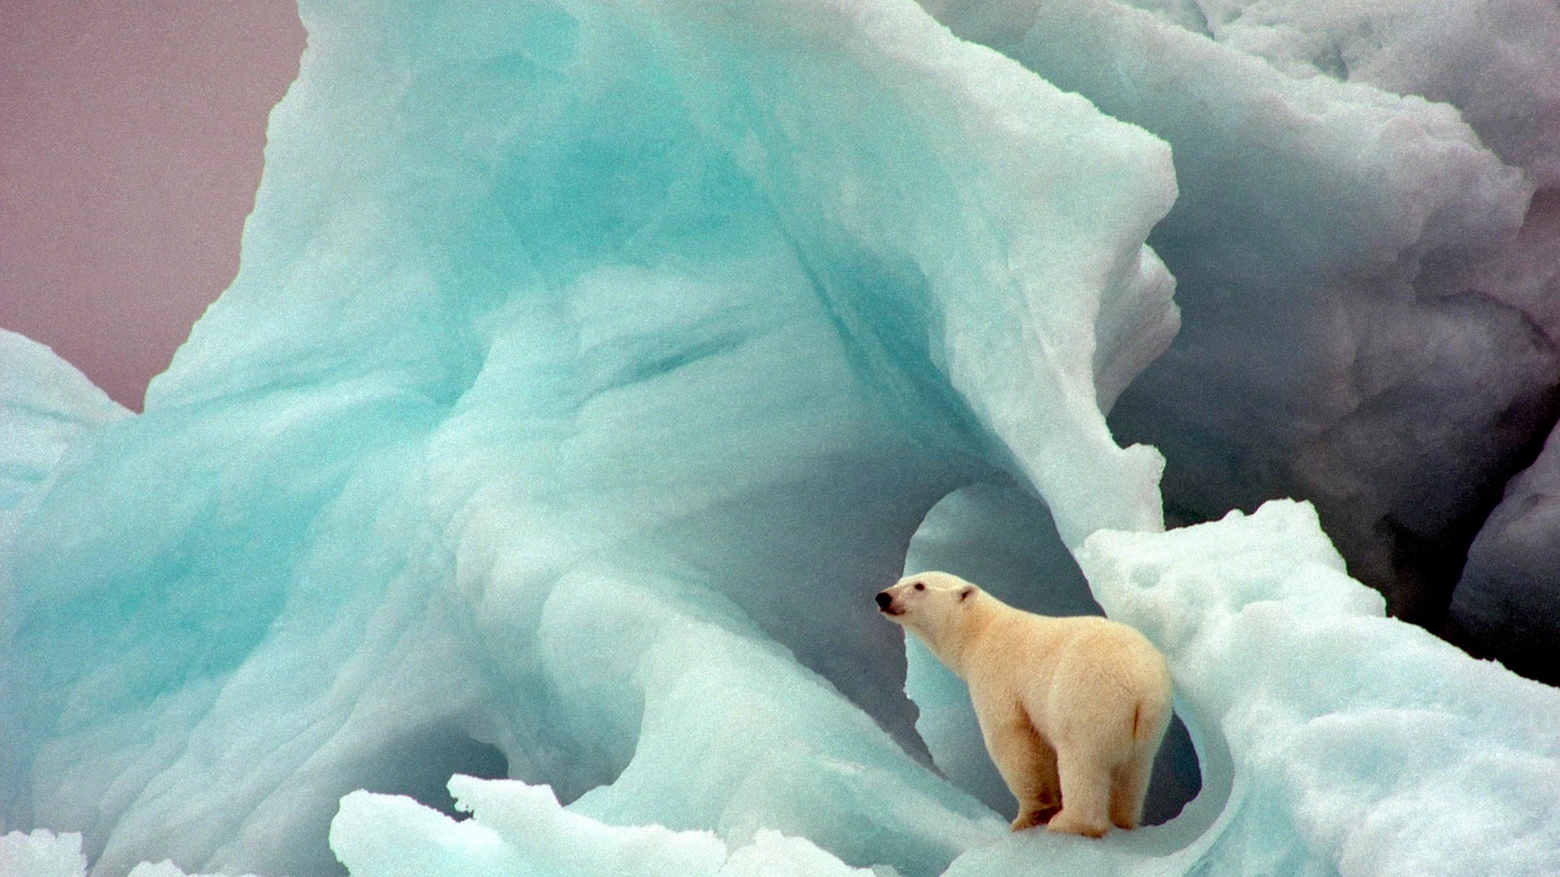 Riscaldamento climatico, a rischio i ghiacci polari (Ansa)